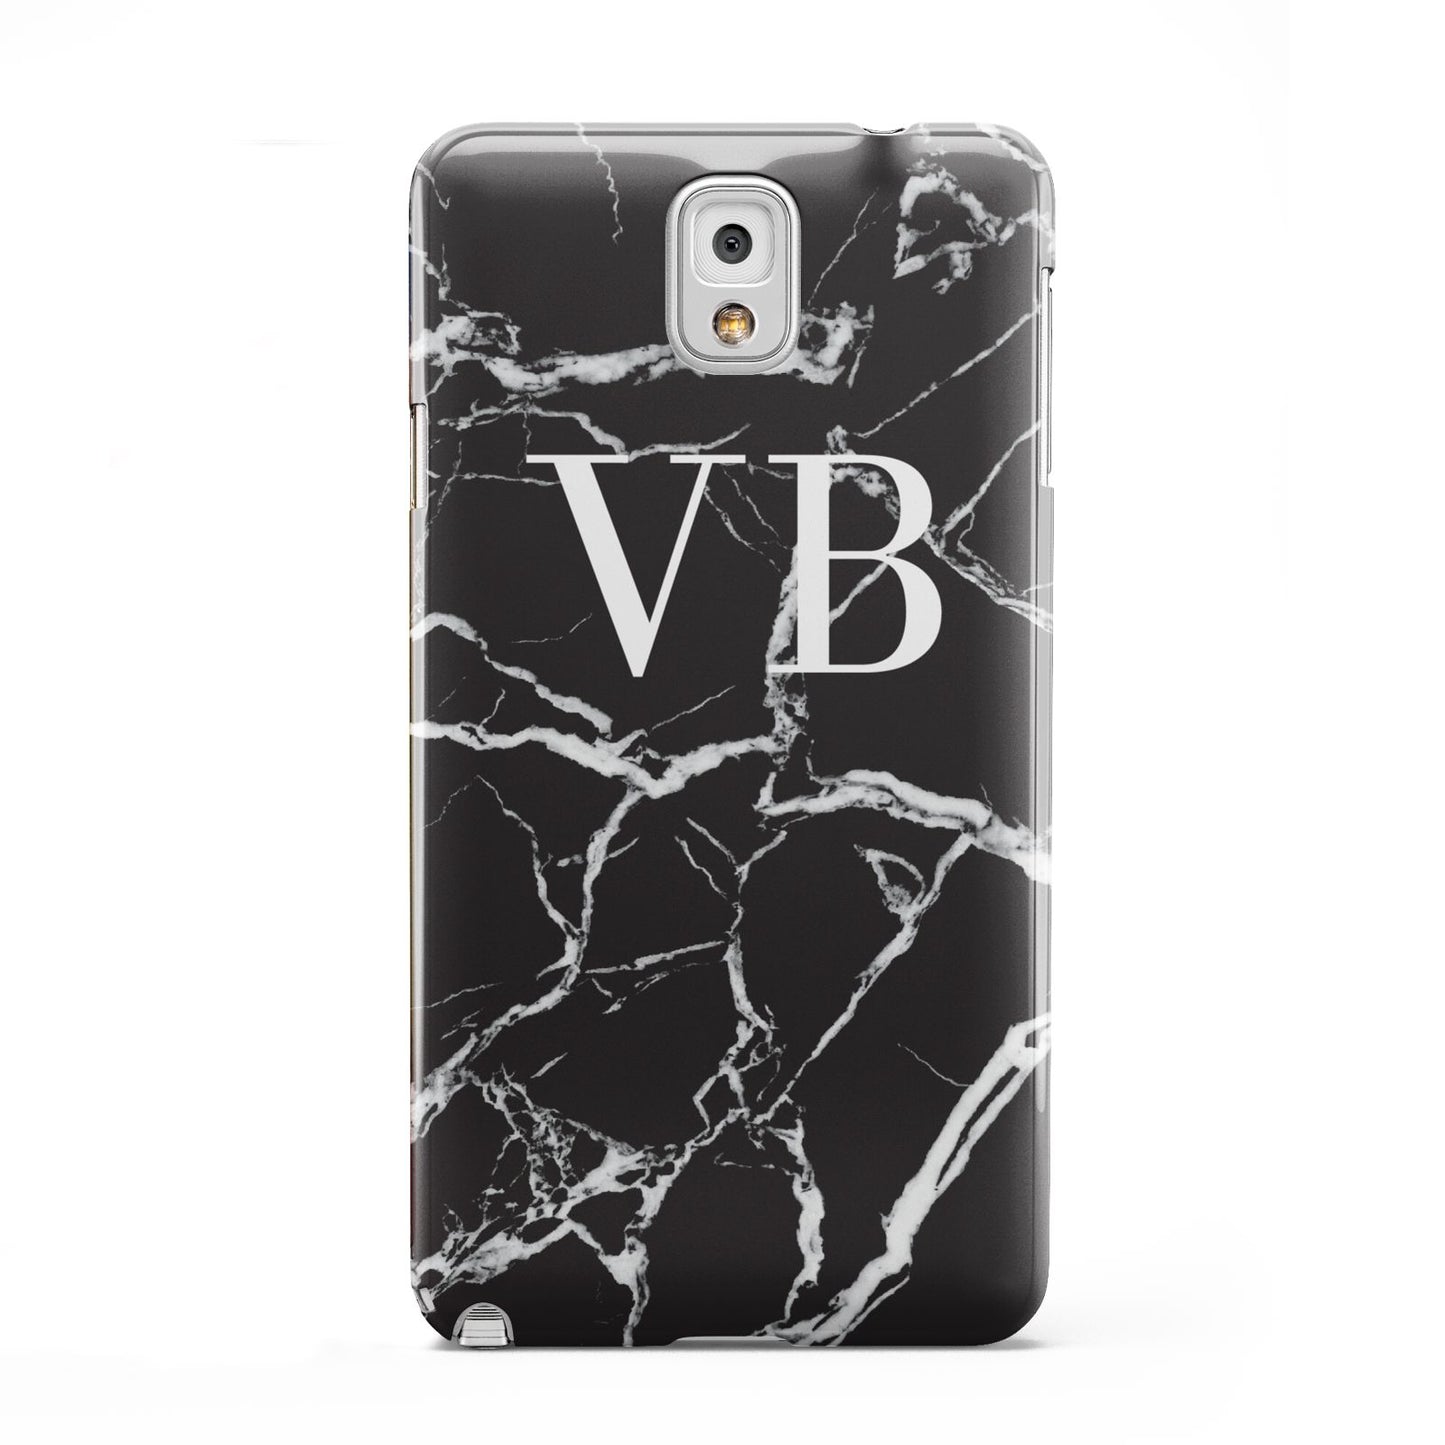 Personalised Black Marble Effect Monogram Samsung Galaxy Note 3 Case